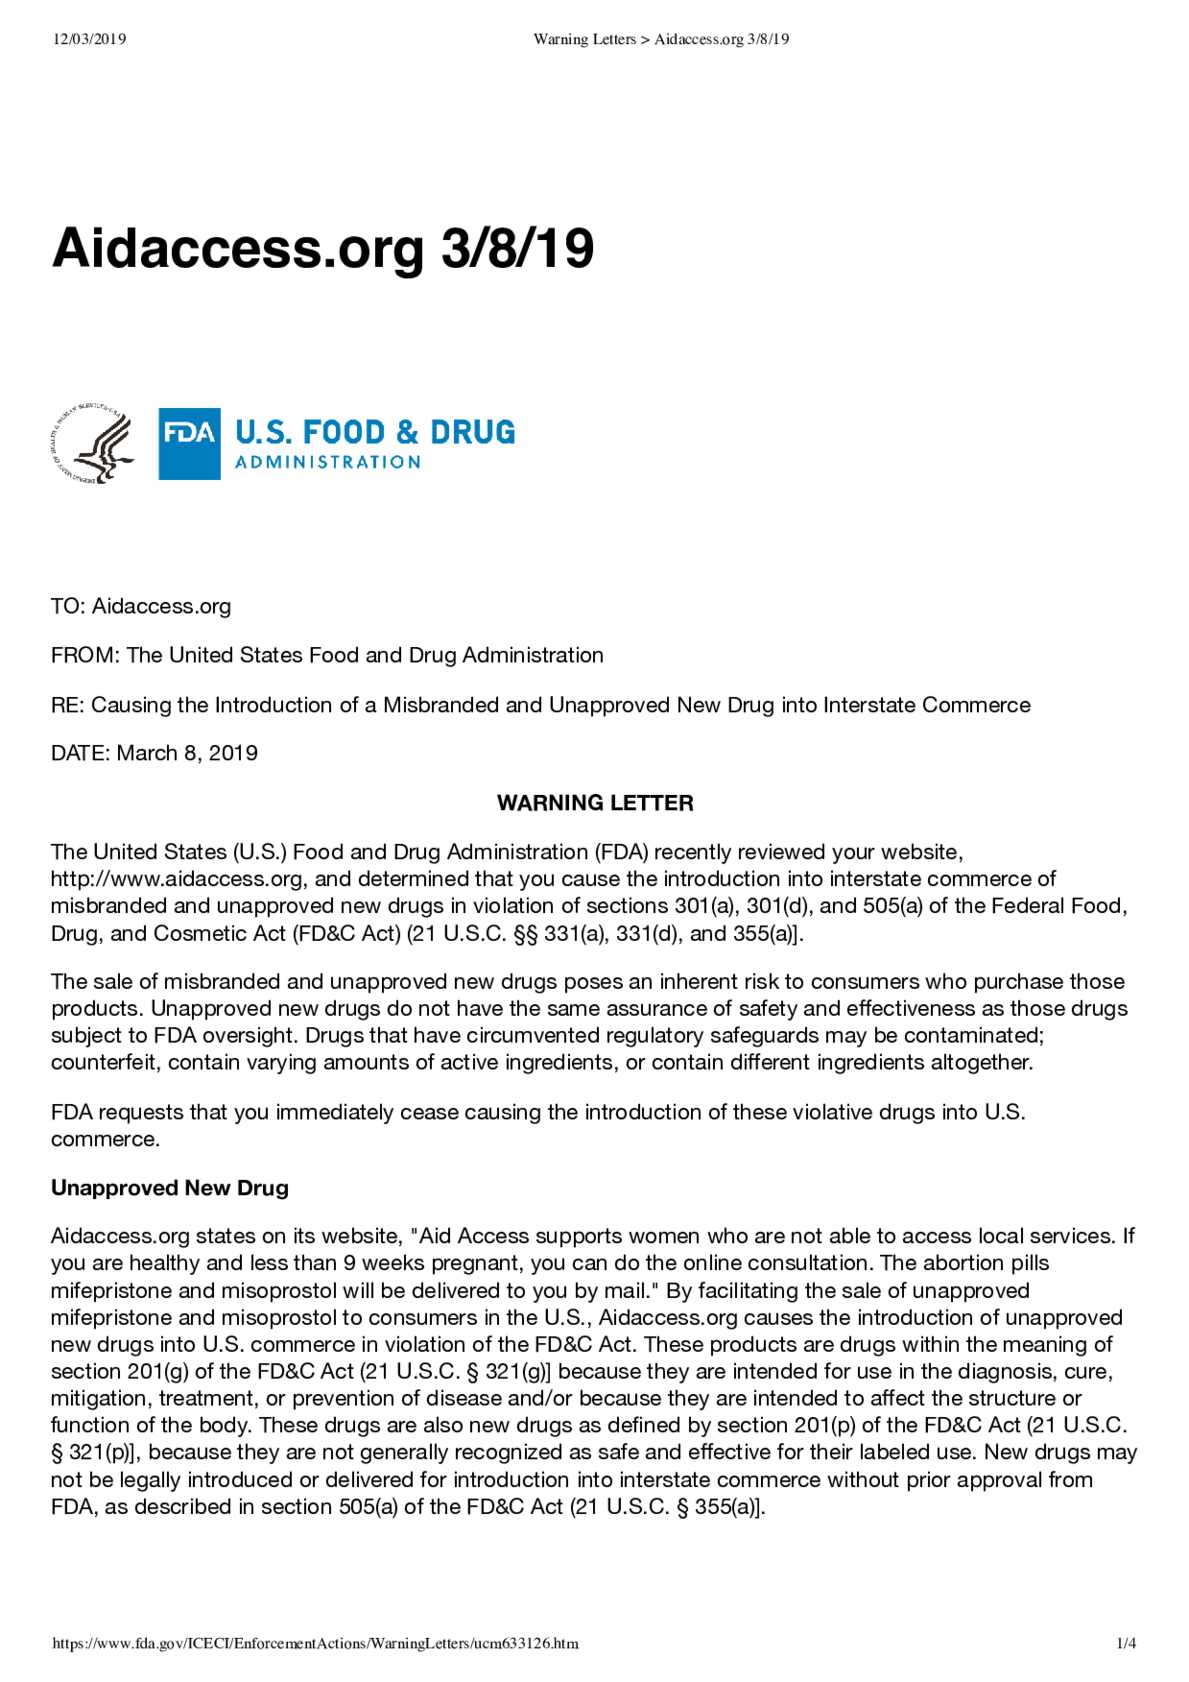 Warning letter FDA Aid Access